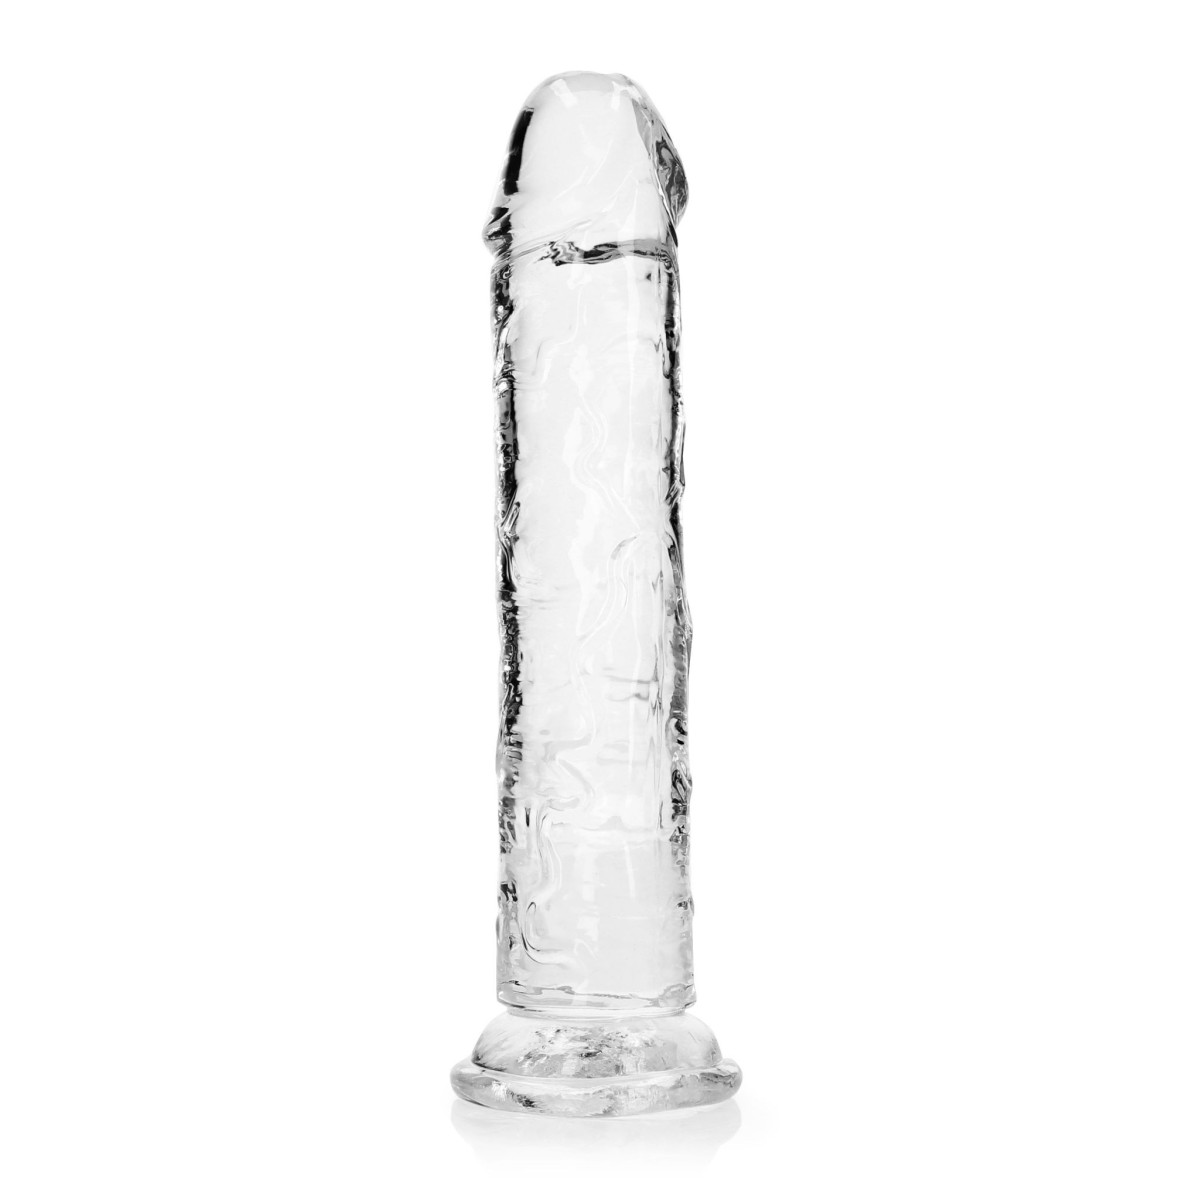 Gelové dildo RealRock Crystal Clear Realistic 9″ průhledné, dildo s přísavkou 25,5 x 4,5 cm